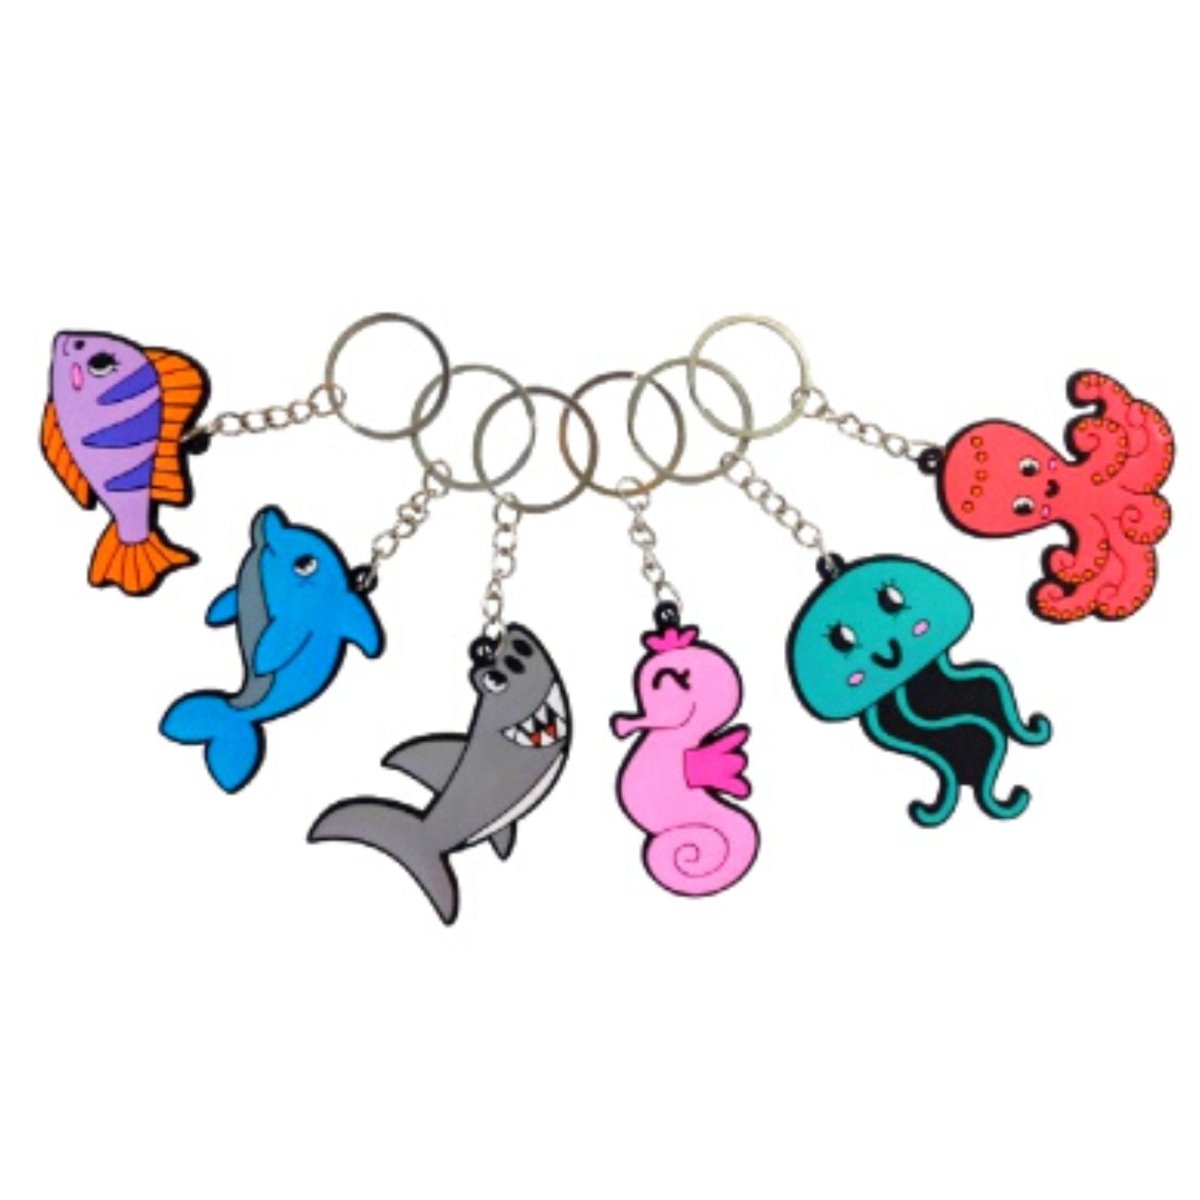 Sea Life Novelty Keychain - Kids Party Craft